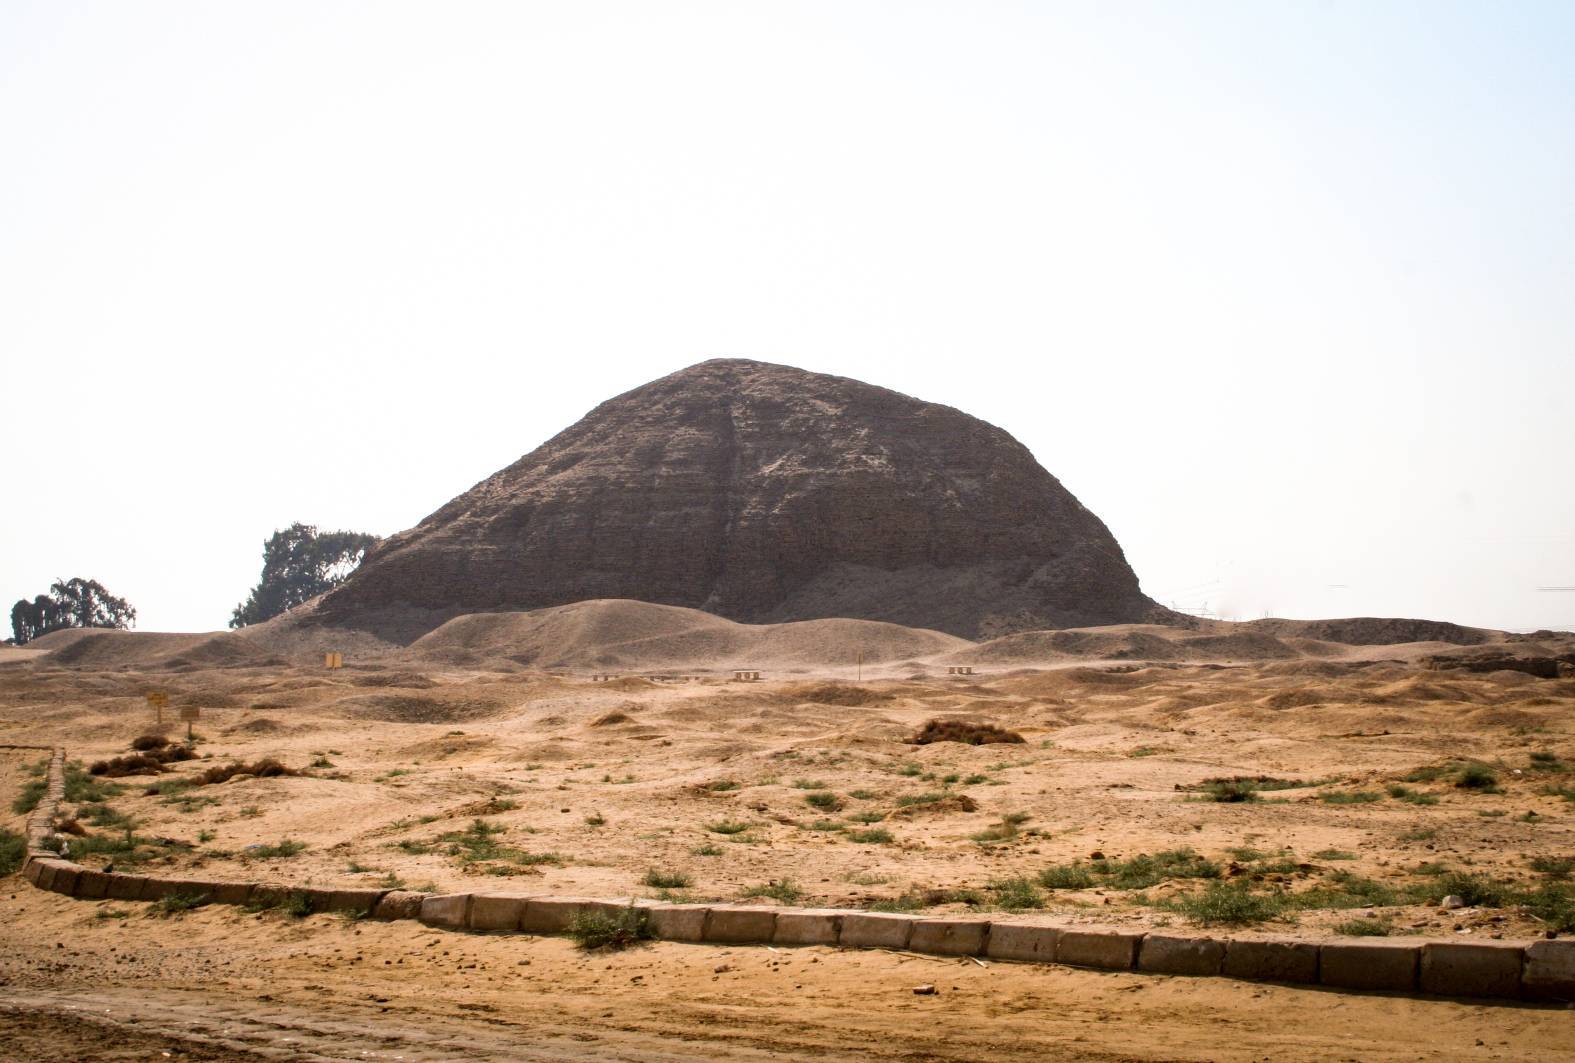 The Pyramid of the 12th Dynasty Pharaoh Amenemhat III at Hawara, from the east.